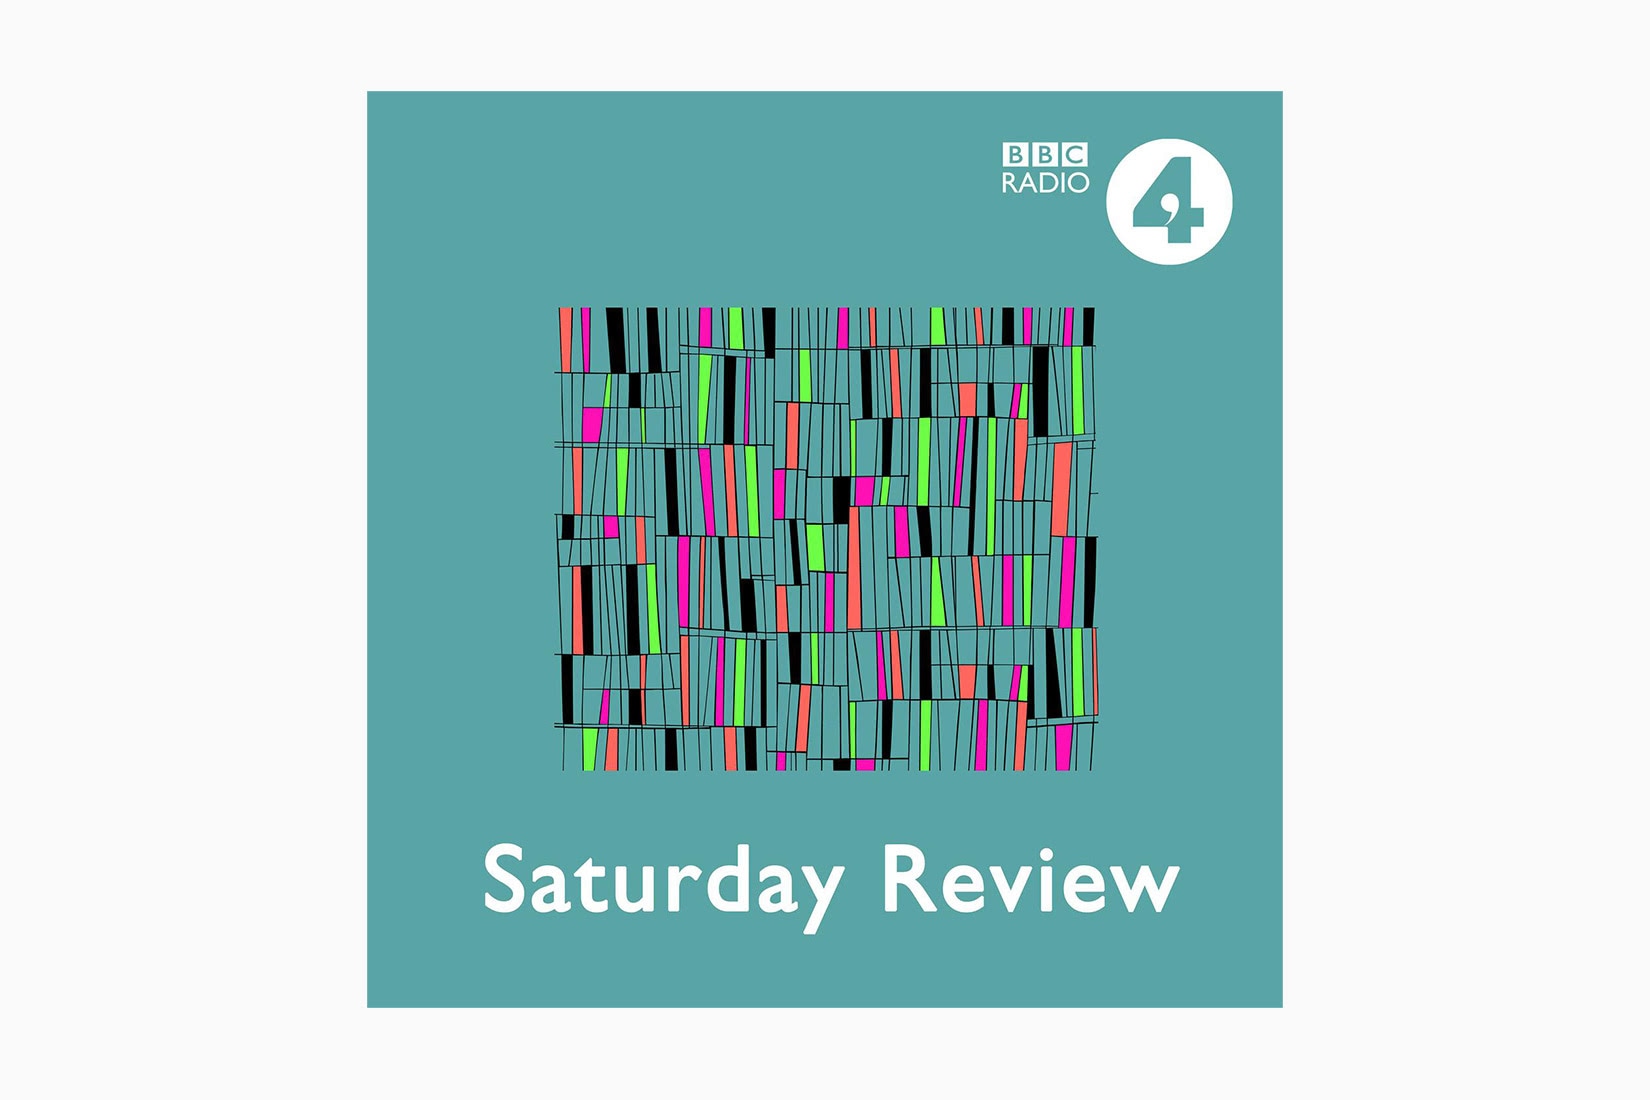 meilleurs podcasts revue du samedi bbc radio luxe digital